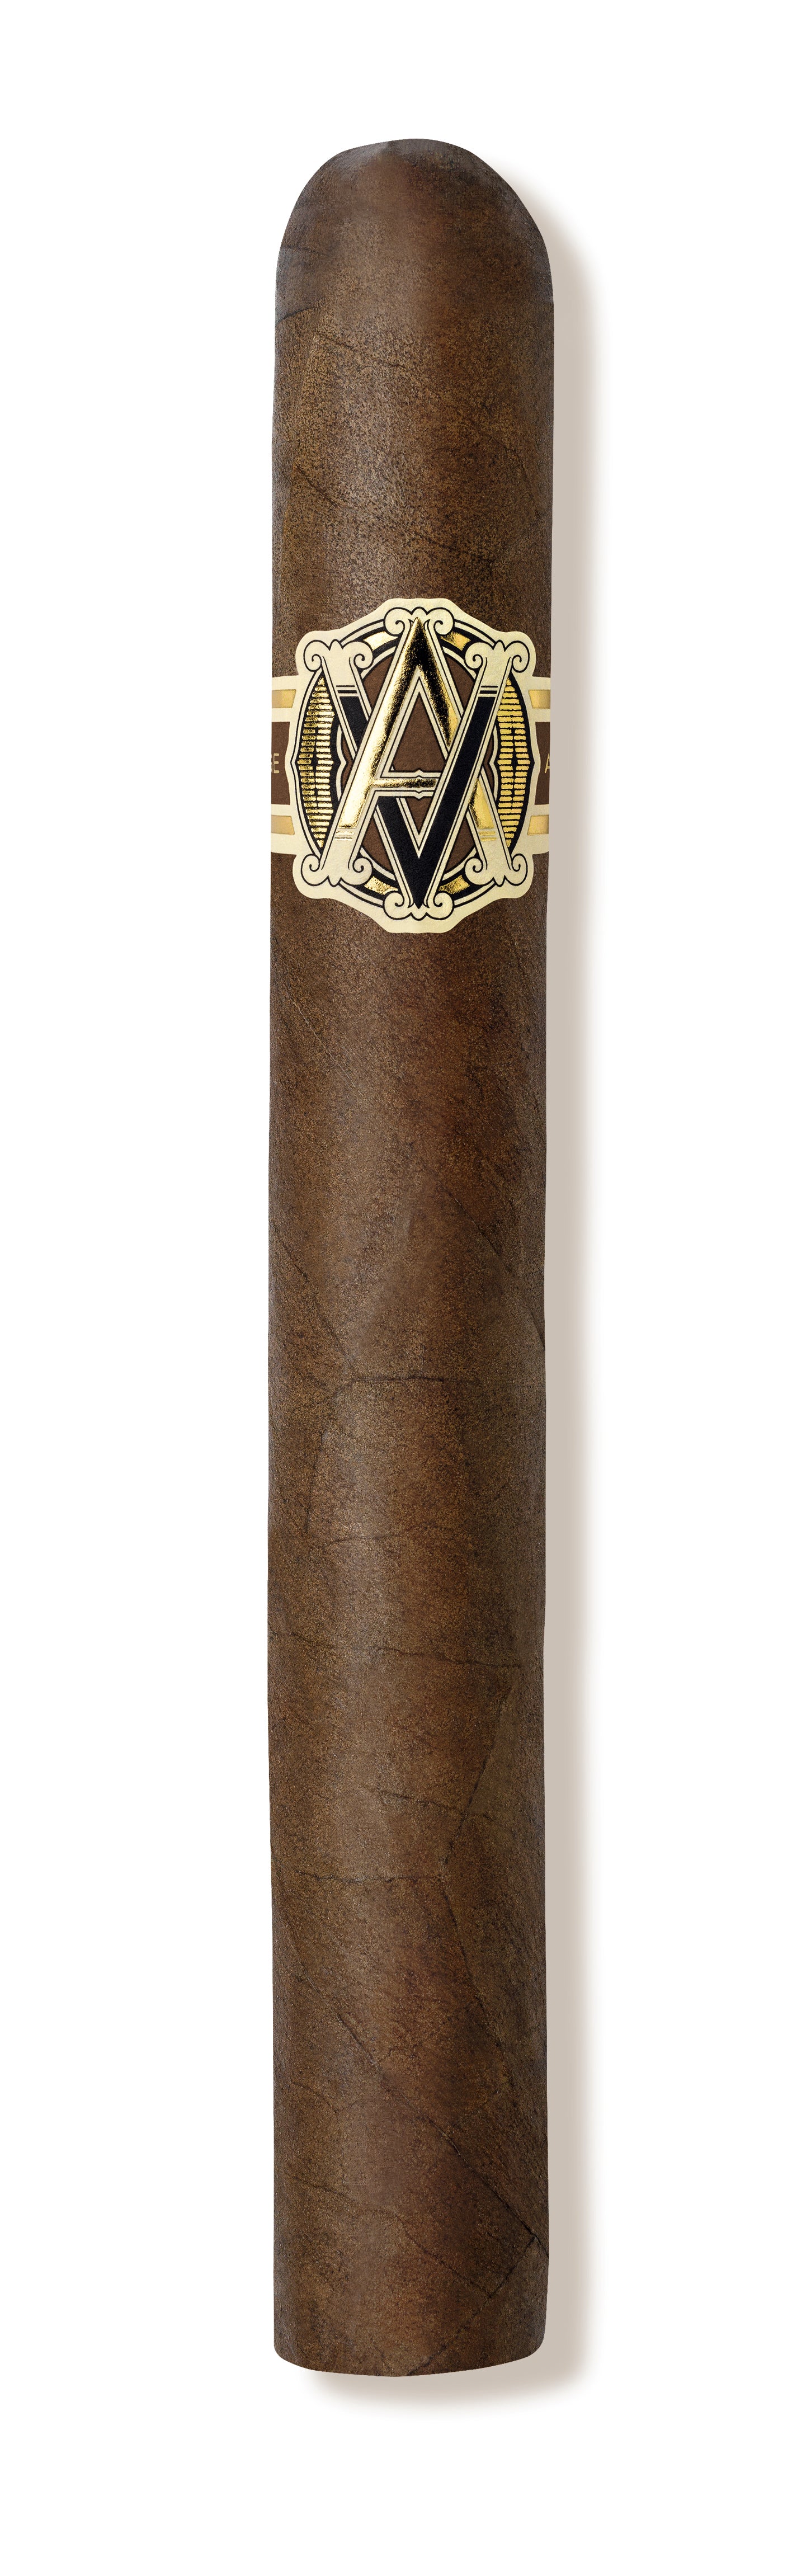 Avo Cigars Heritage Toro-0